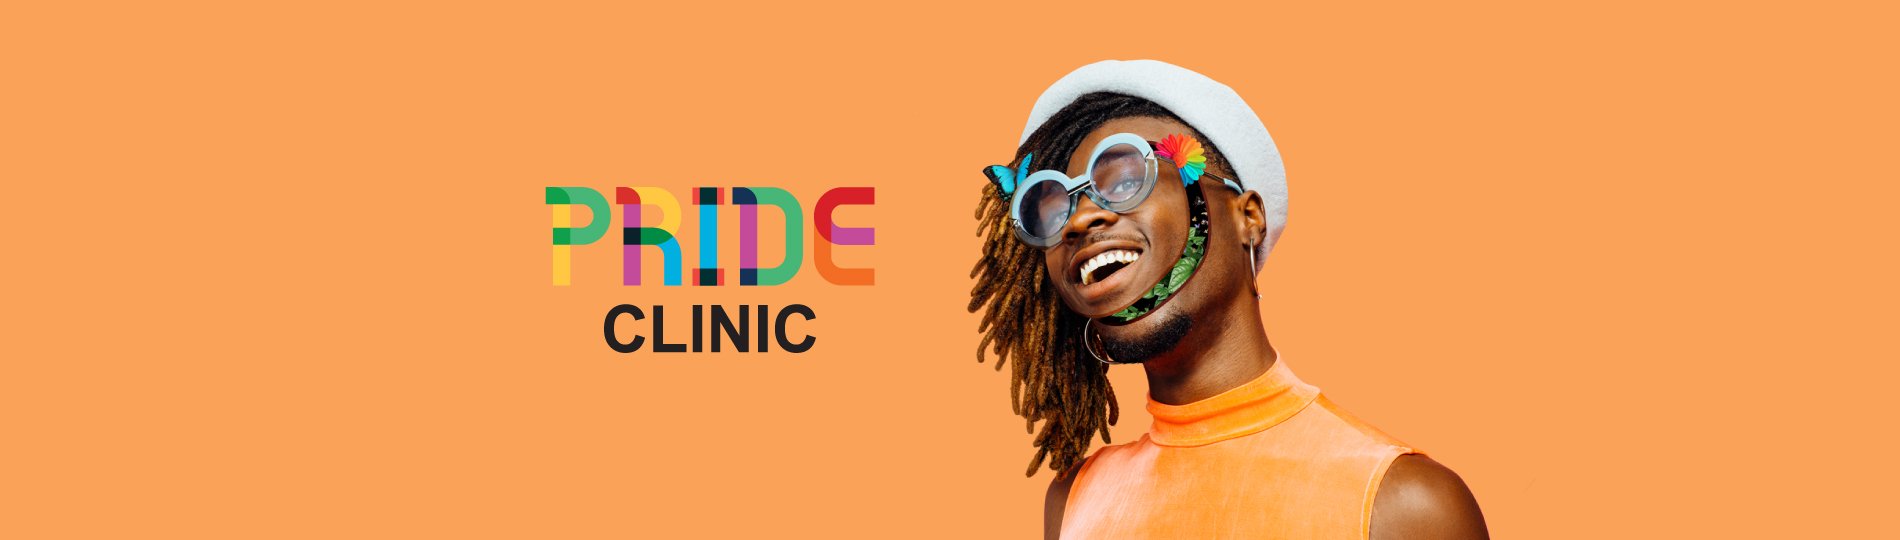 Pride-Clinic_Hero-banner-2_Desktop_AW1.jpg